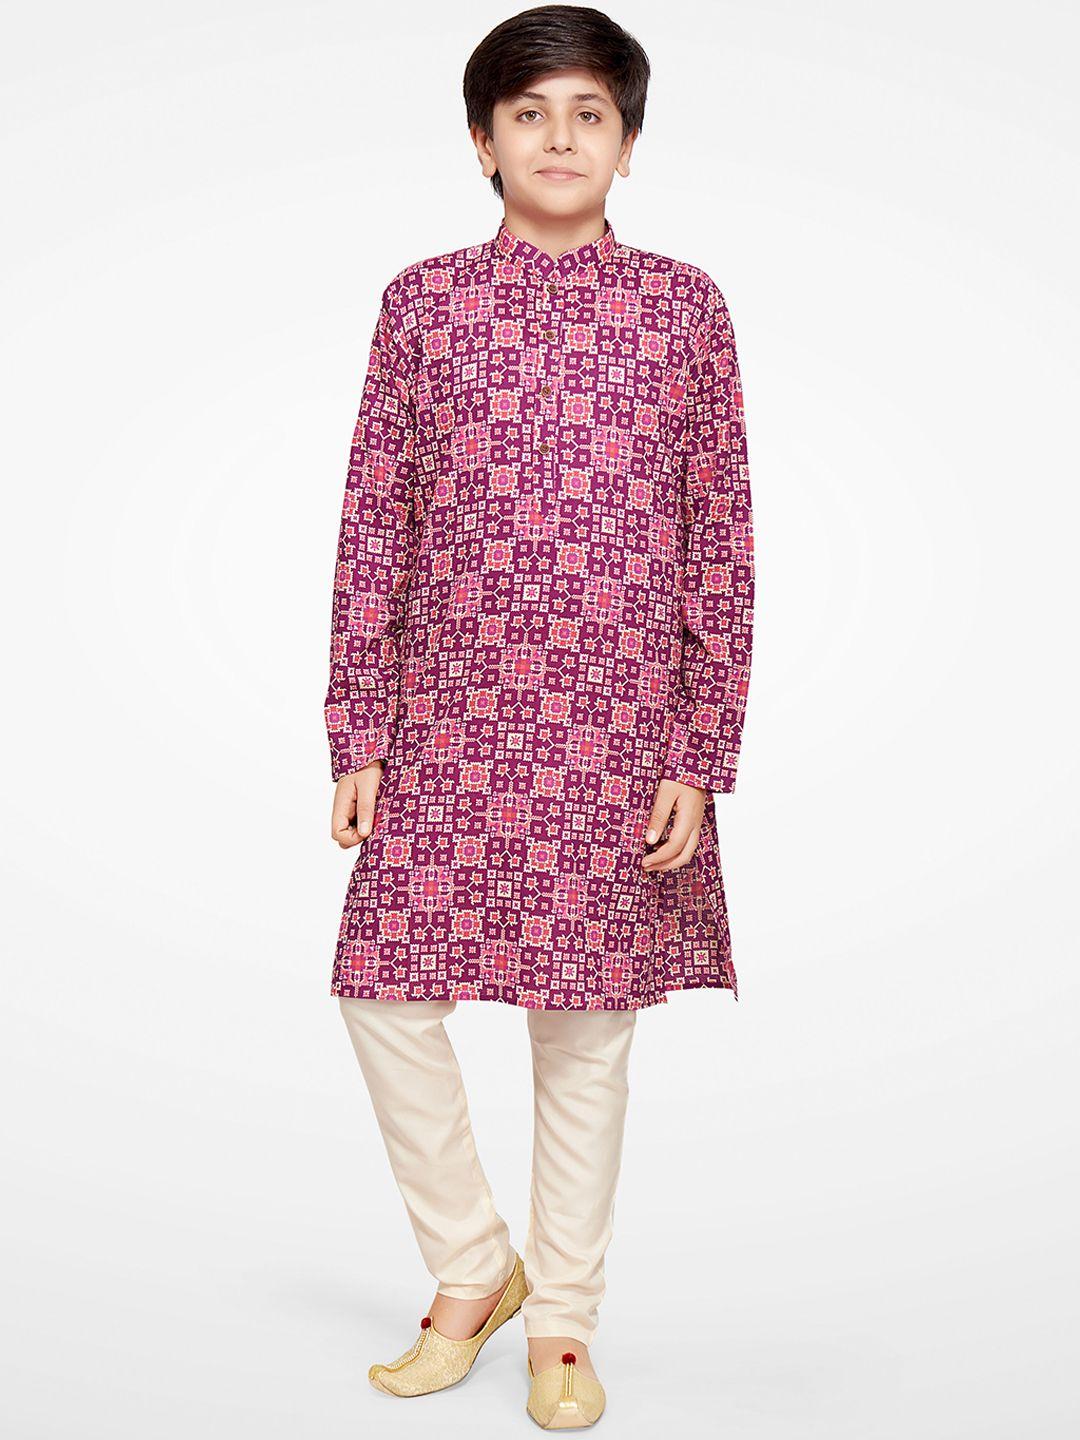 jeetethnics boys purple & cream ethnic motifs printed kurta with churidar